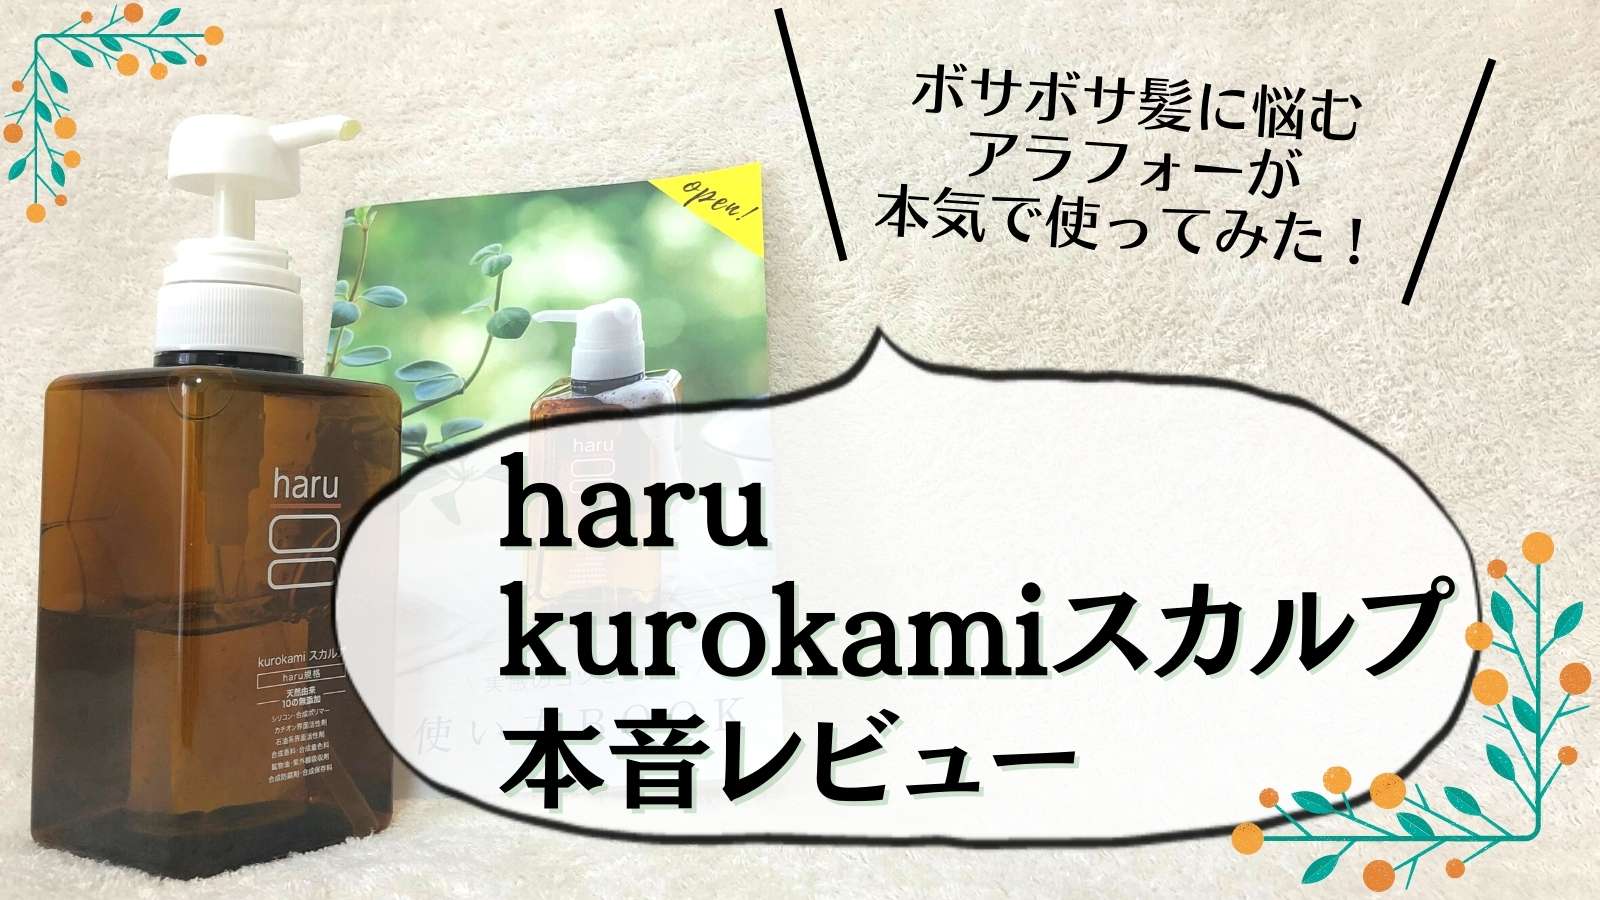 haru kurokami スカルプ | ボサ髪ママ脱出計画 - アラフォーの髪の悩み対策ブログ